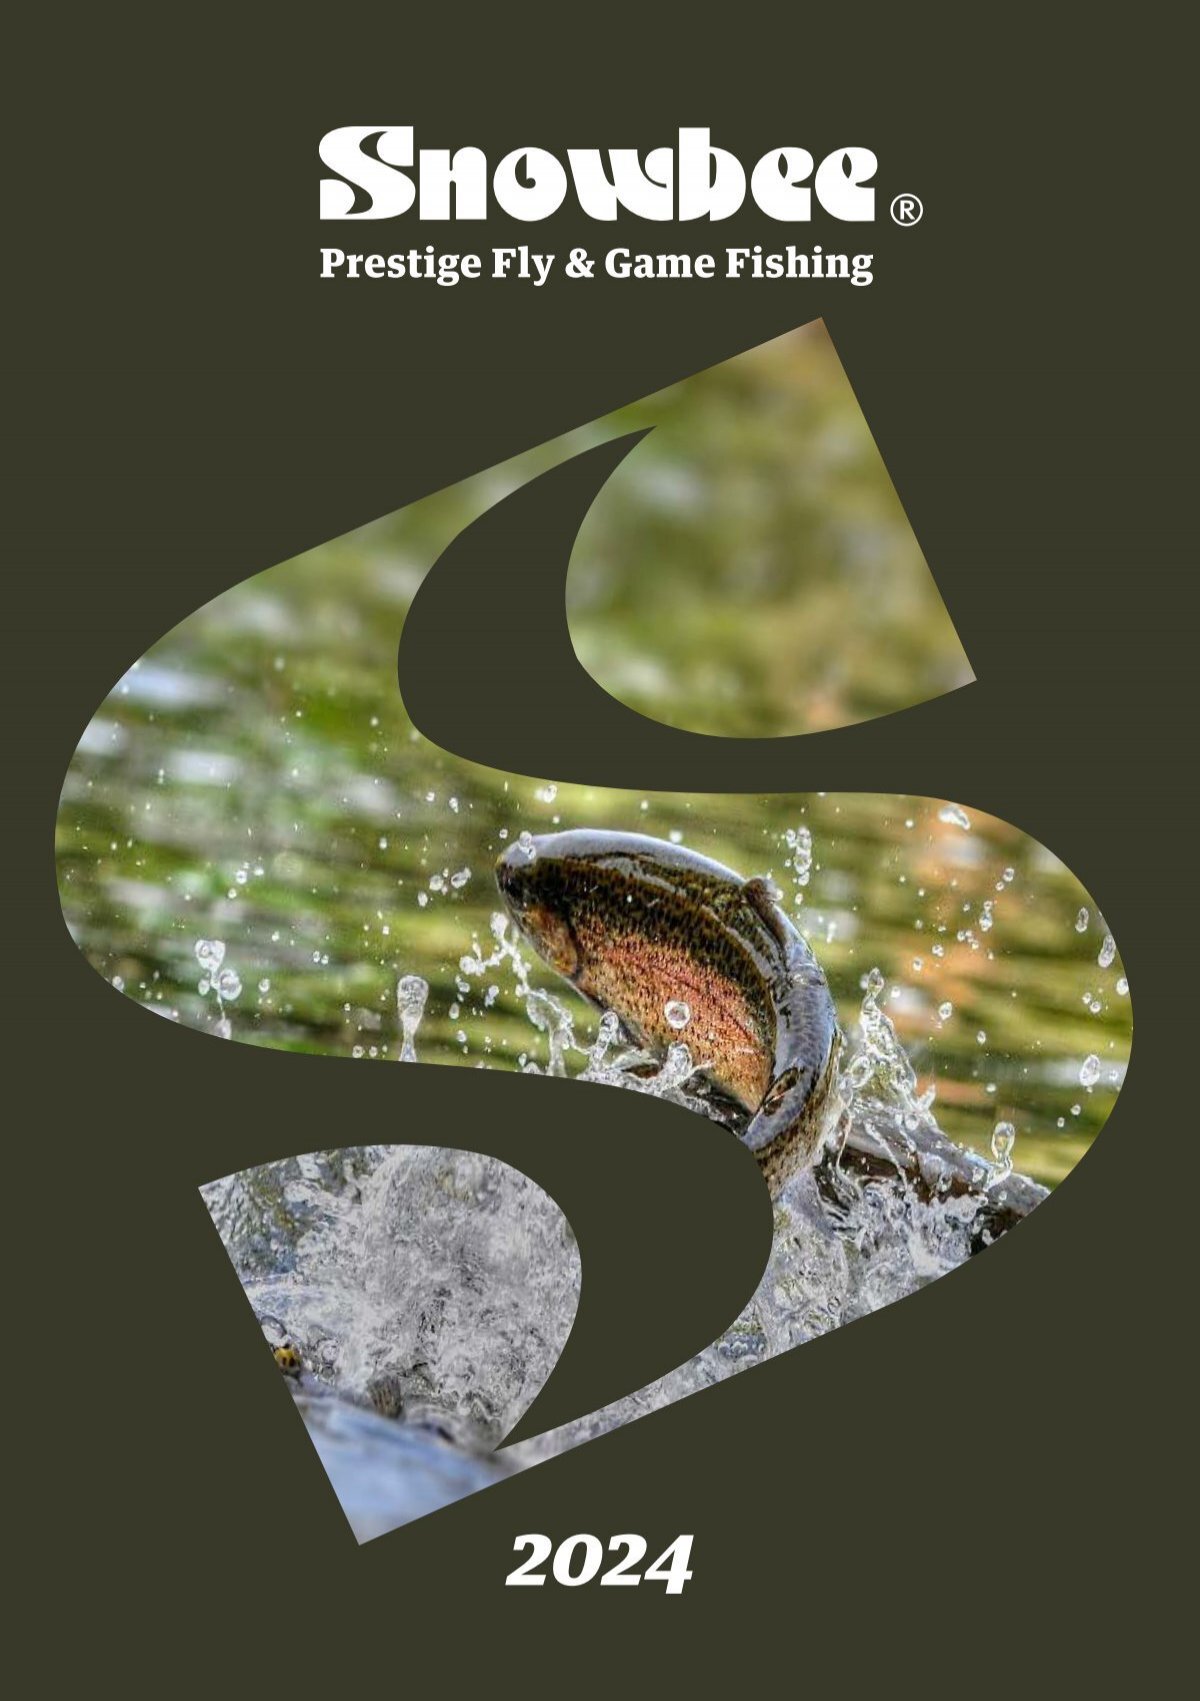 Snowbee Prestige Fly & Game Fishing 2024